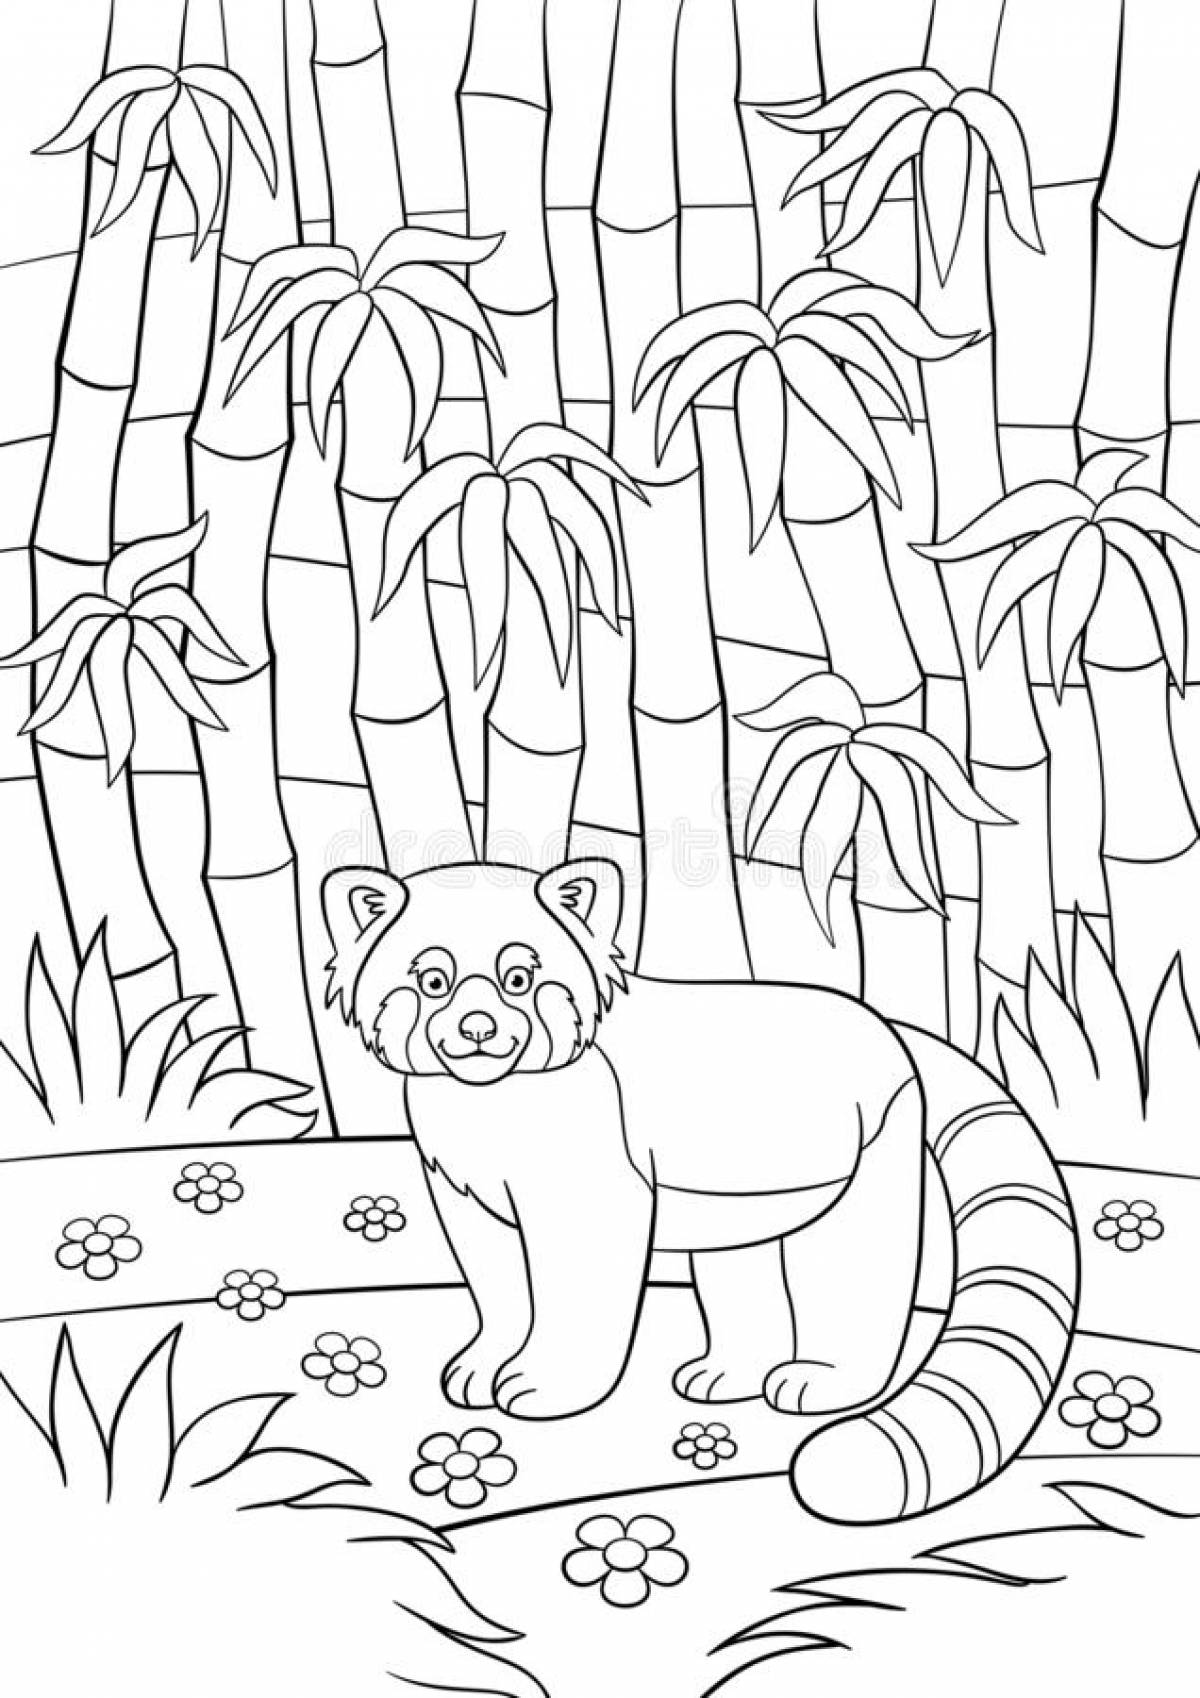 Bamboo and lemur